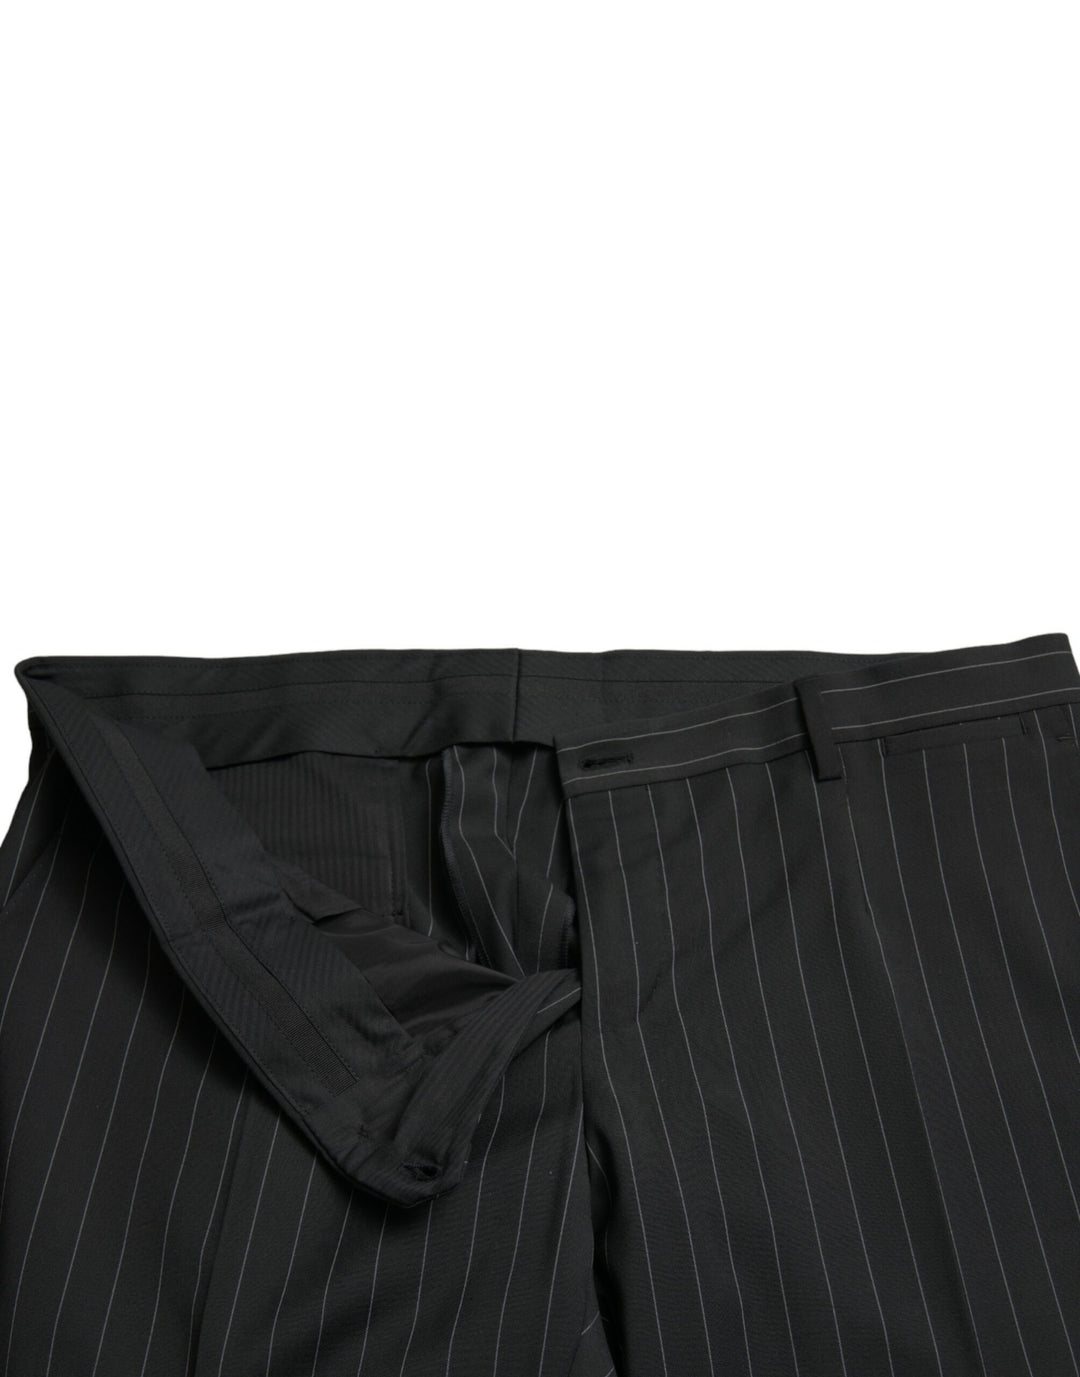 Dolce & Gabbana Black and White Striped Skinny Dress Pants